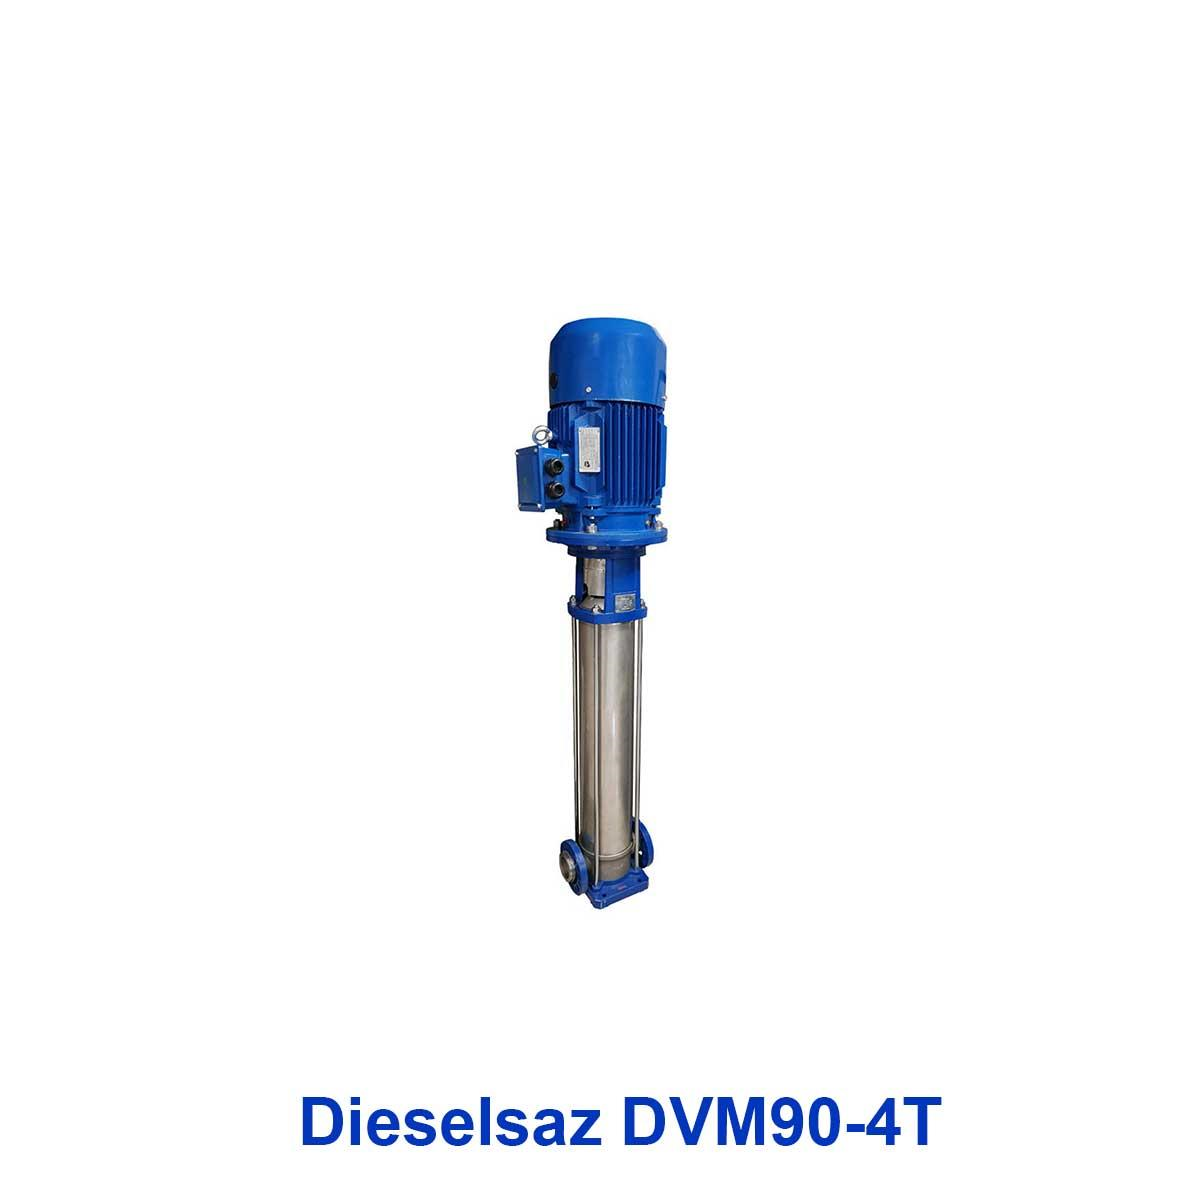 waterpump-vertical-Dieselsaz-DVM90-4T